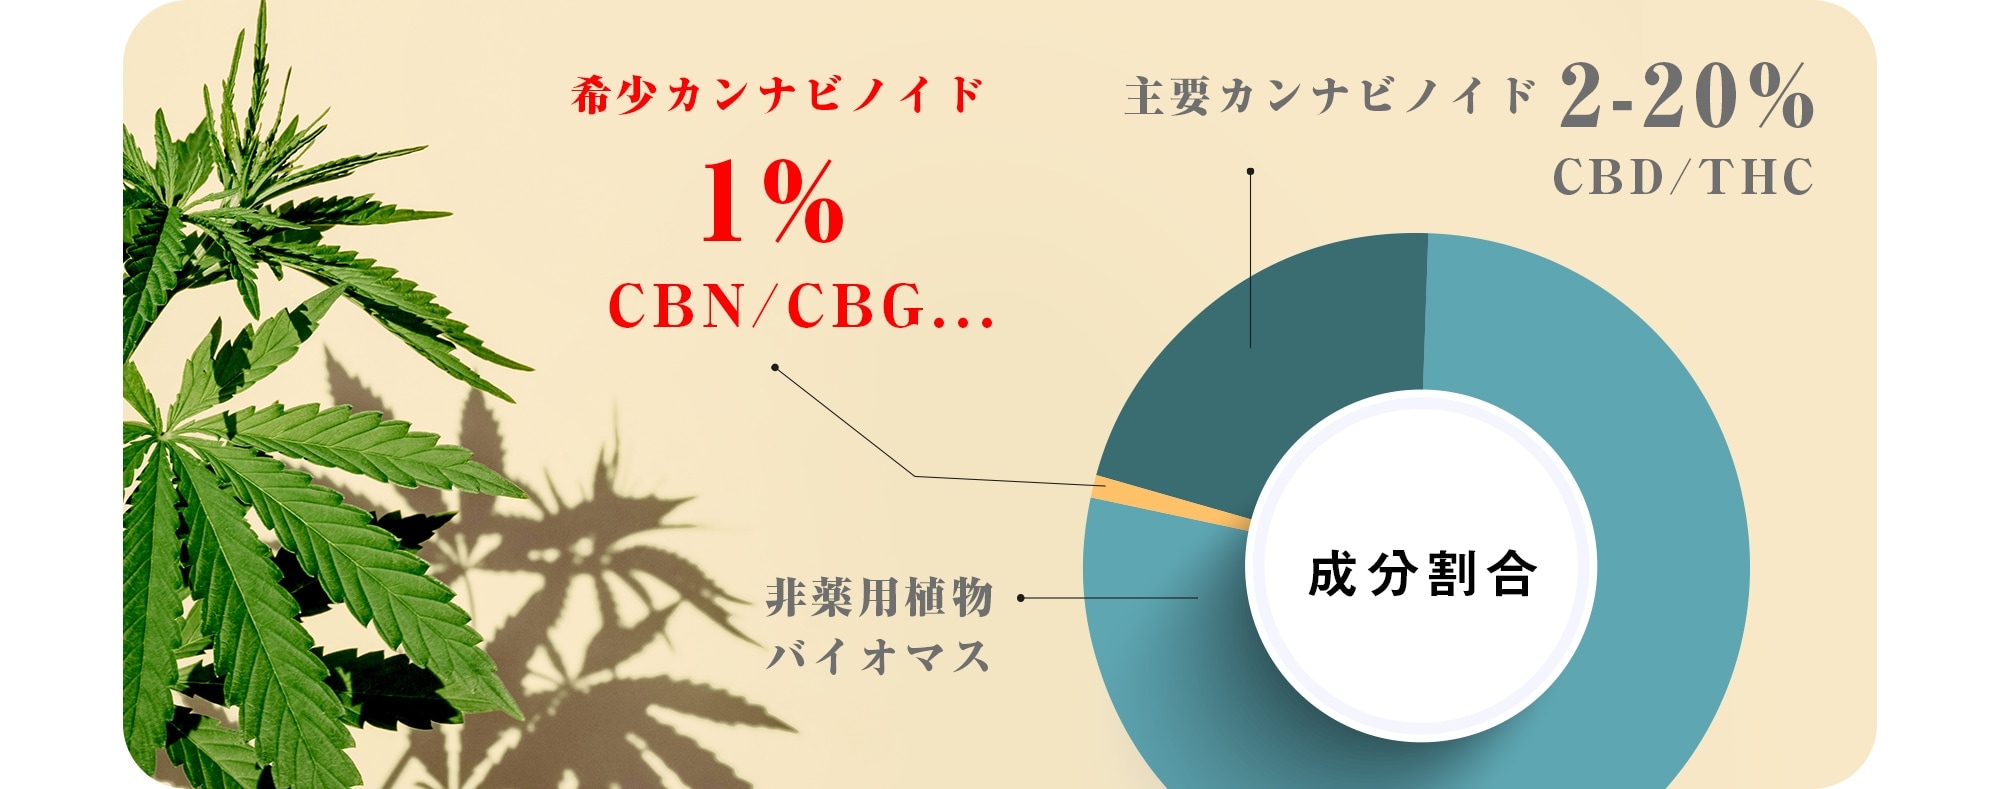 Greeus CBNオイル【SLEEP】 10% | CBNオイル | VapeMania CBD